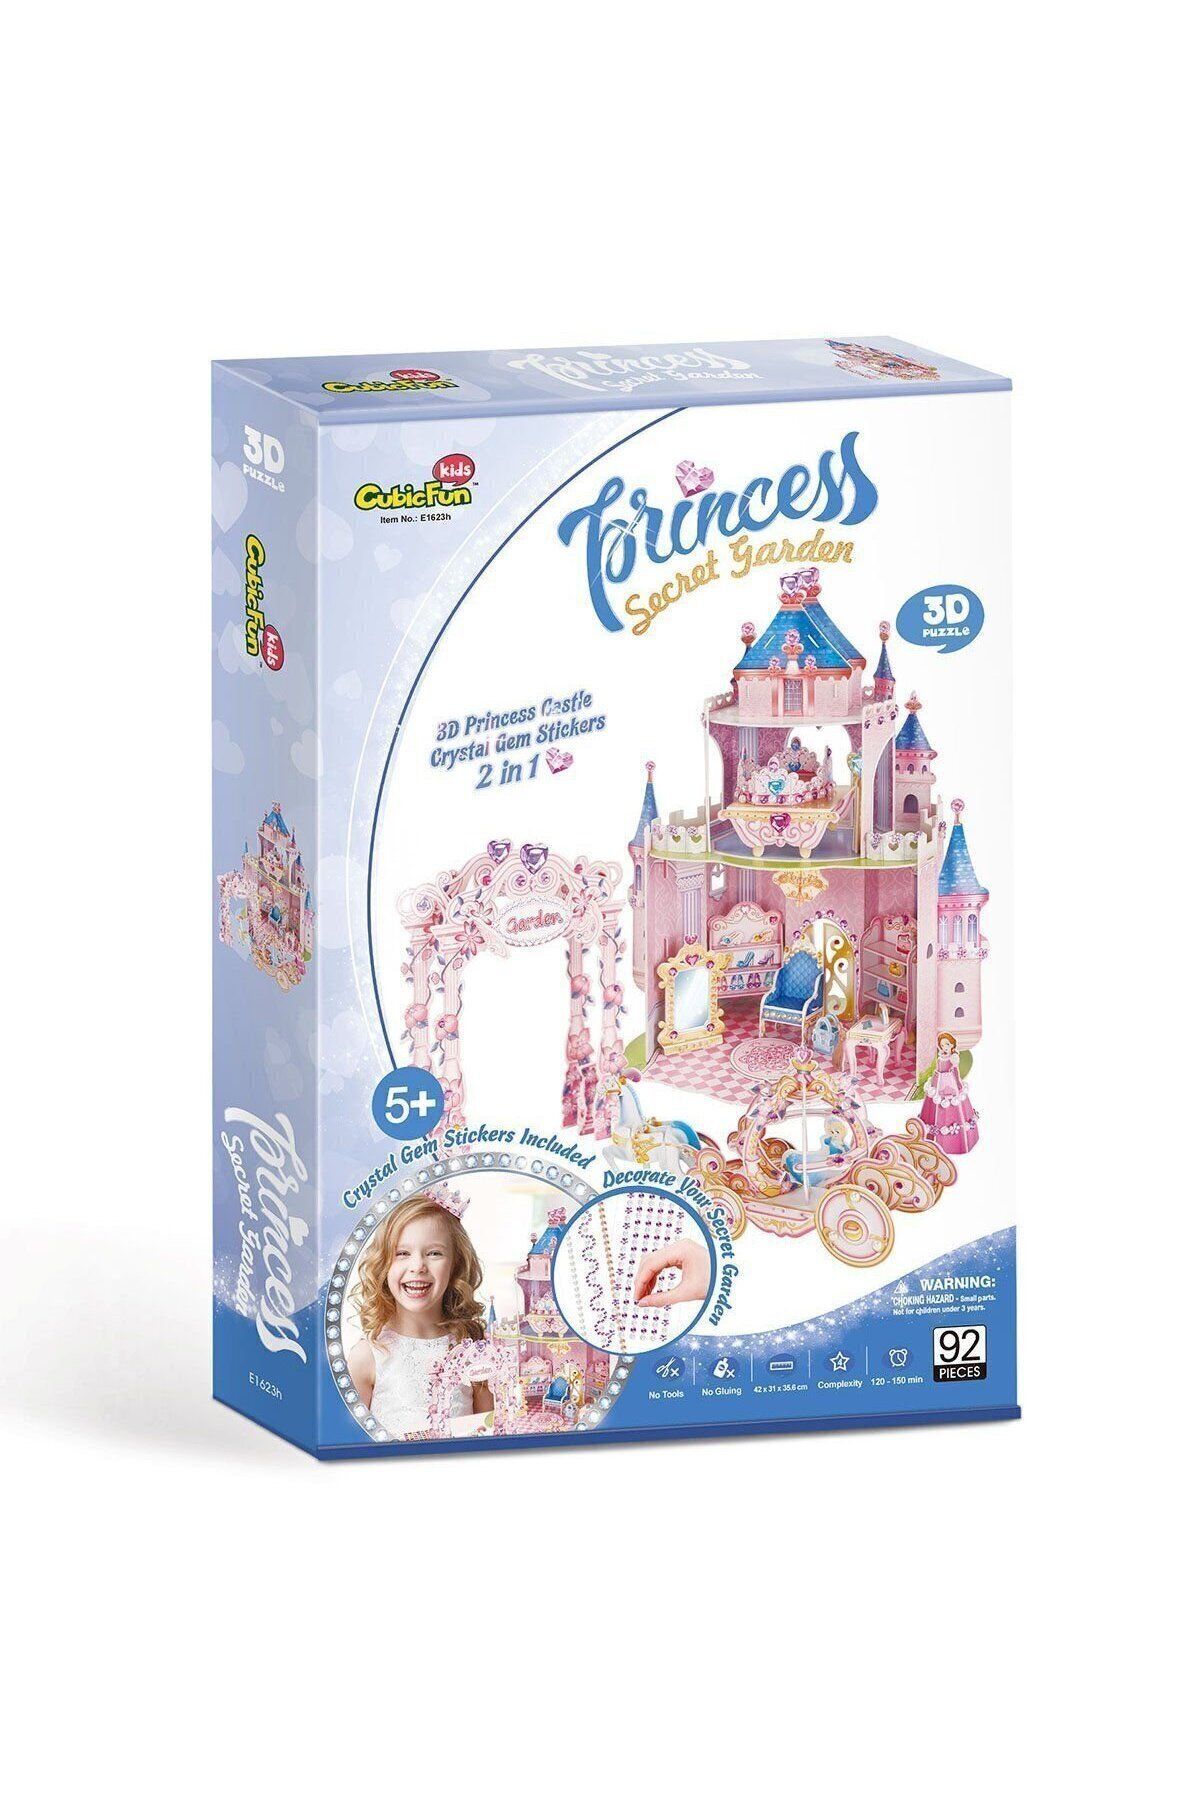 Muhcu Home Cubic Fun Prenses Gizli Bahçe Şatosu 92 Parça 3 Boyutlu Puzzle